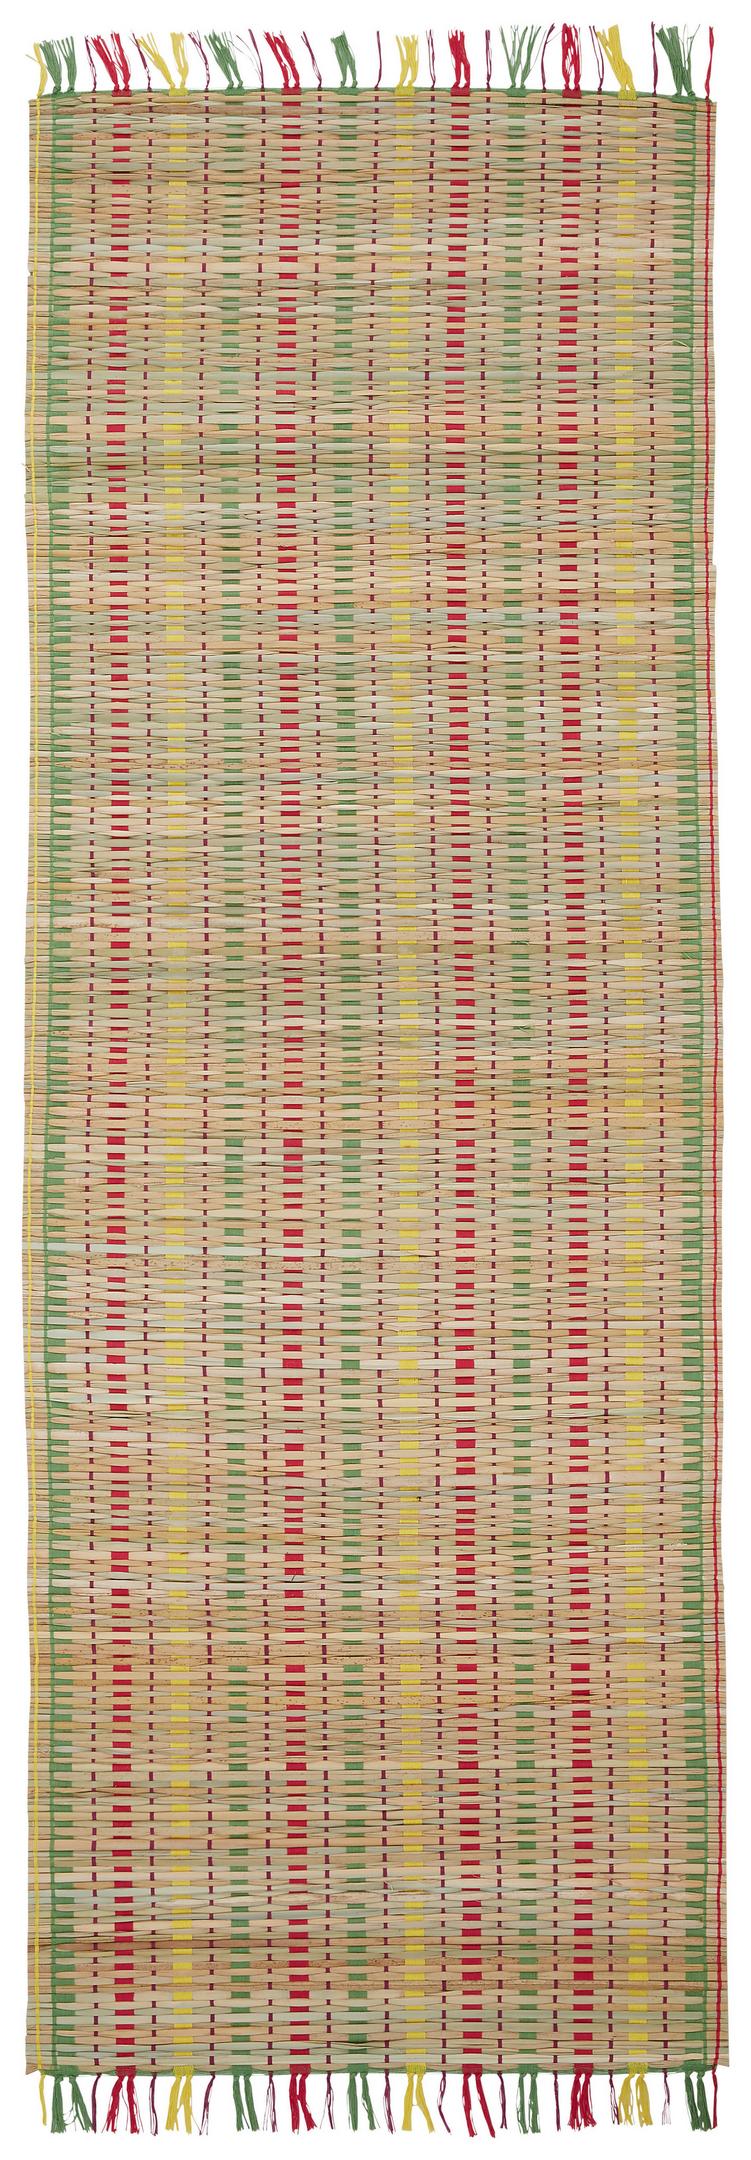 Strandmatte Eularia ca. 65x180cm - Multicolor, MODERN, Textil (65/180cm) - Based